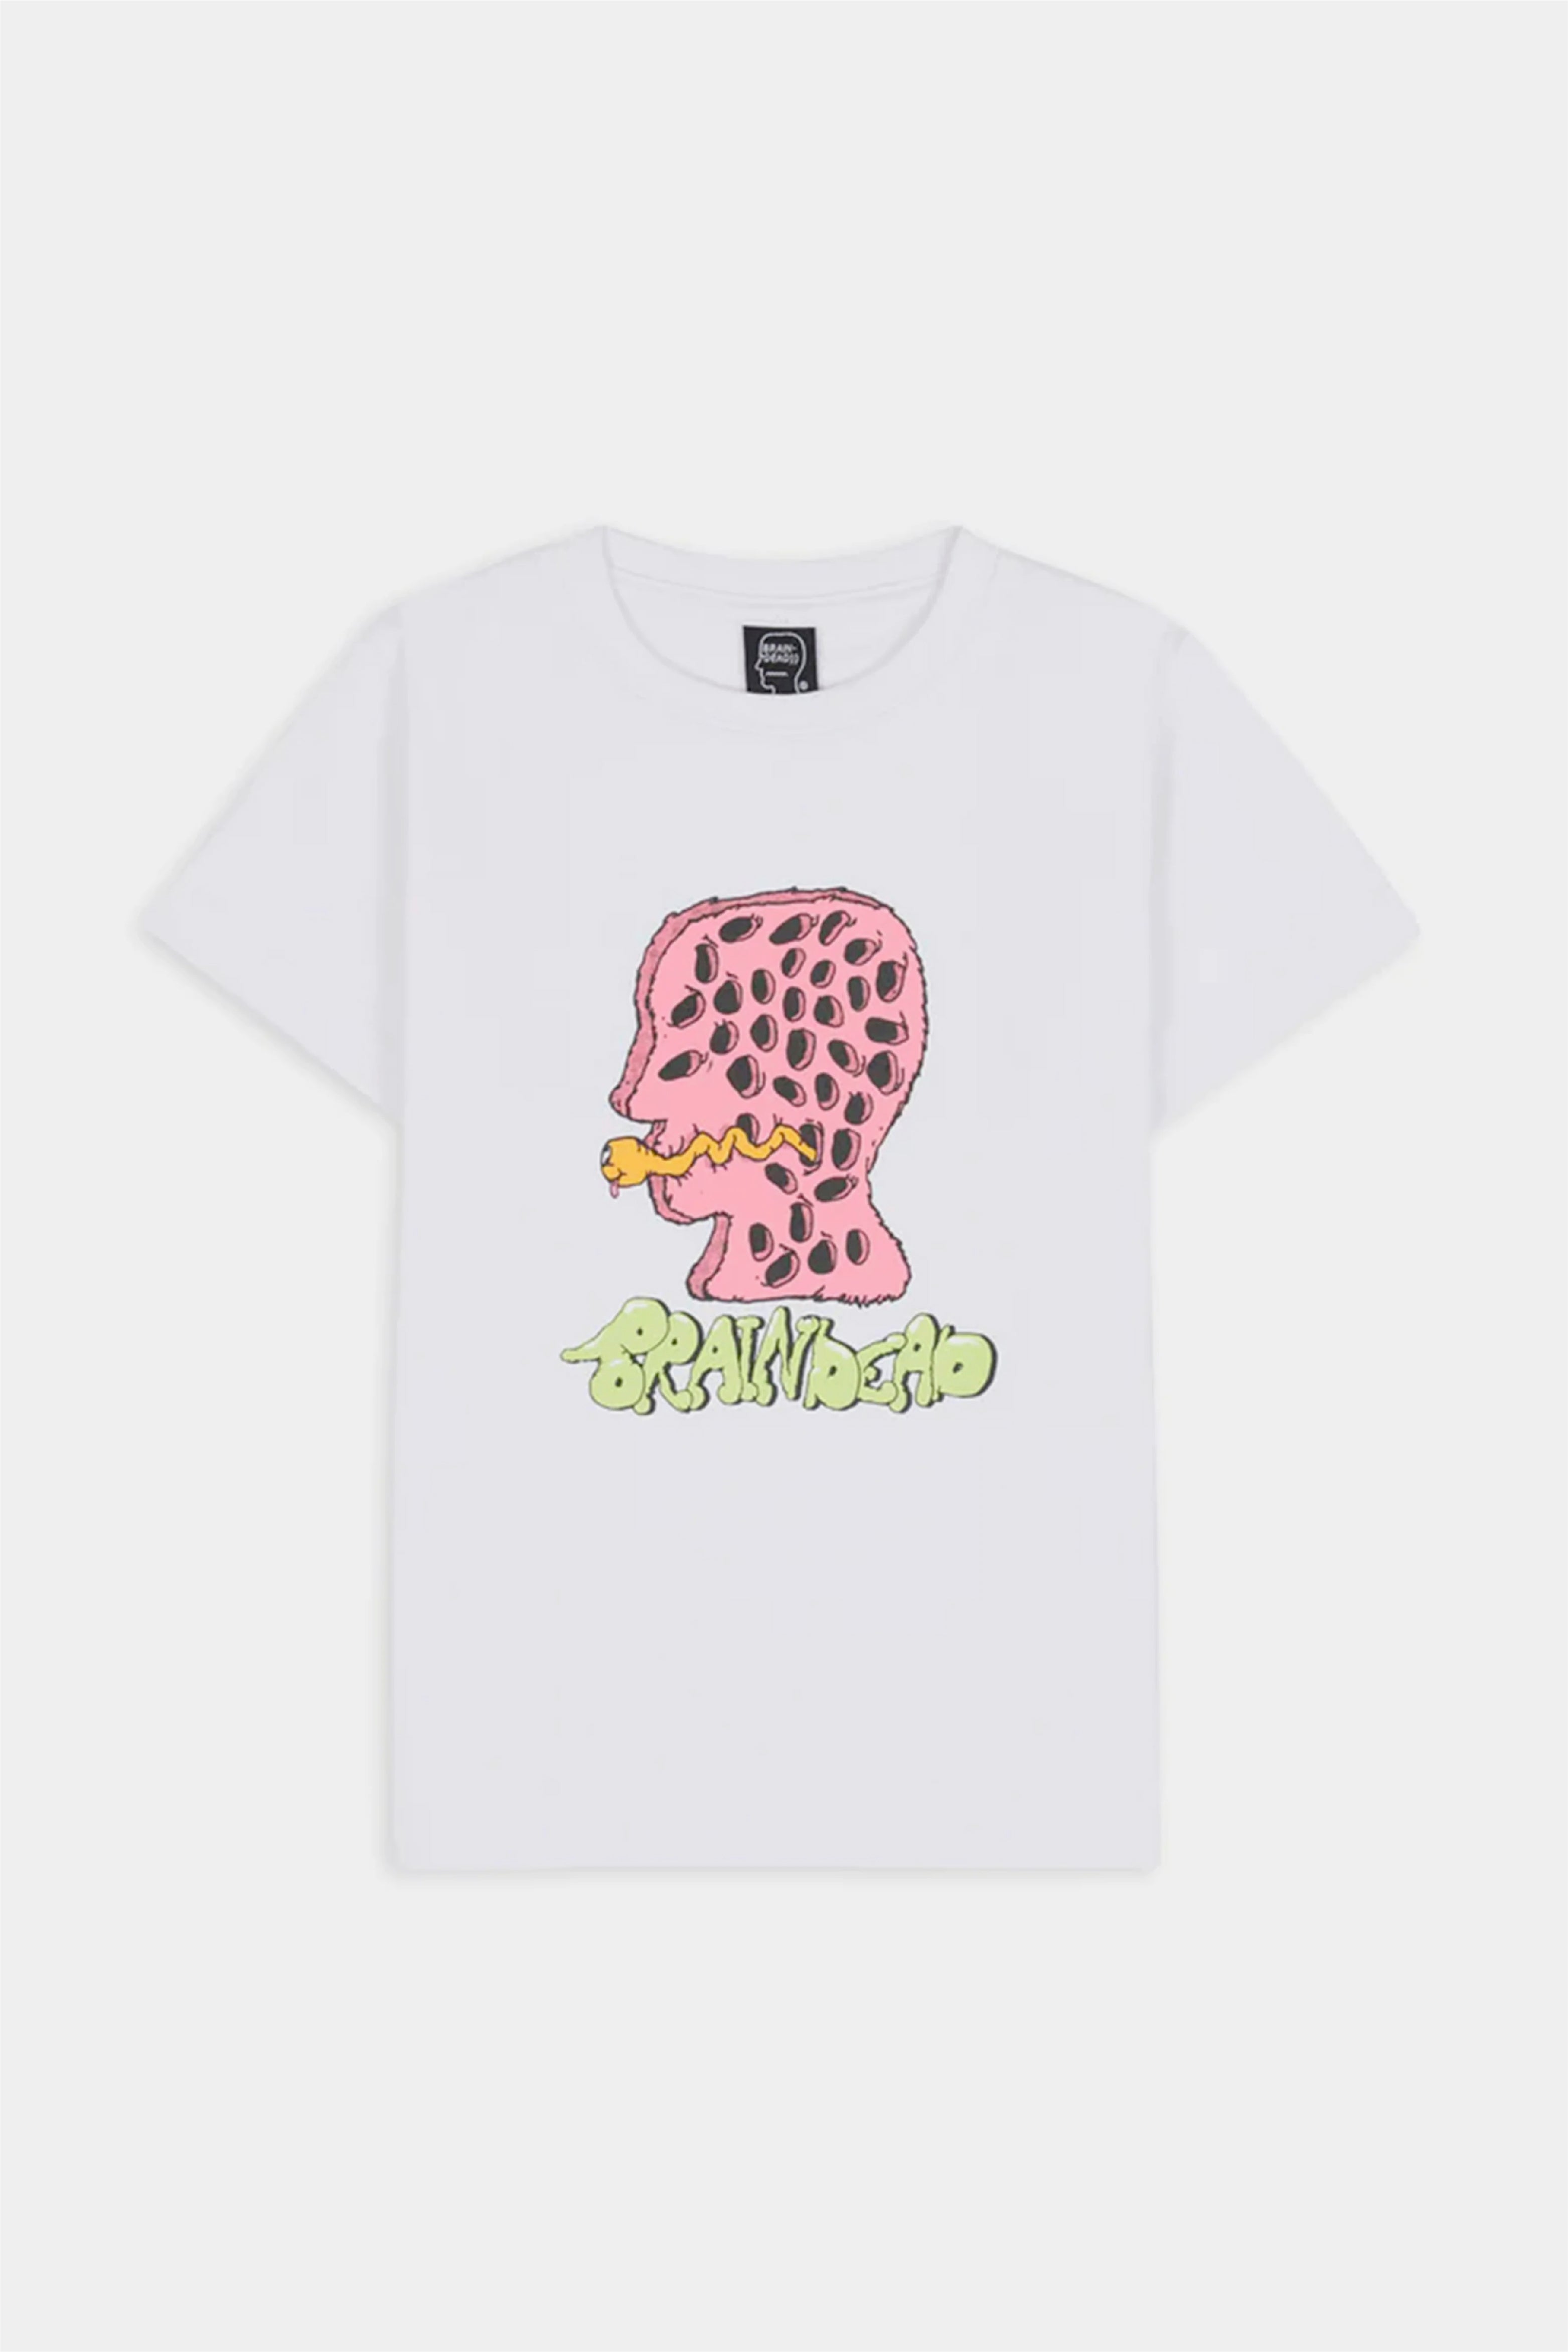 Selectshop FRAME - BRAIN DEAD Worm Hole Kids T-Shirt T-Shirts Dubai